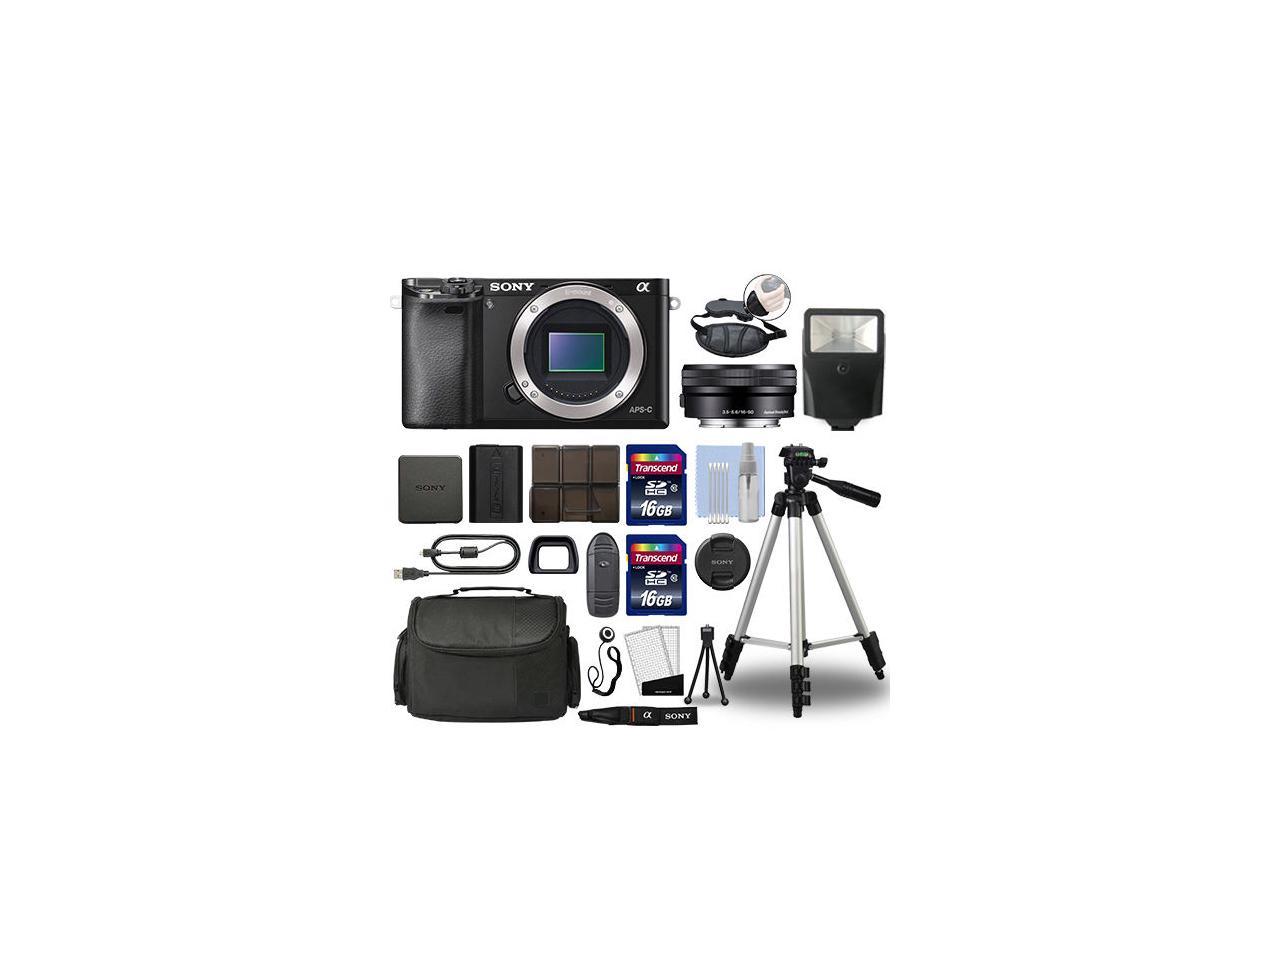 Sony Alpha a6000 Mirrorless Digital Camera with 16-50mm Lens Black + 32GB Bundle